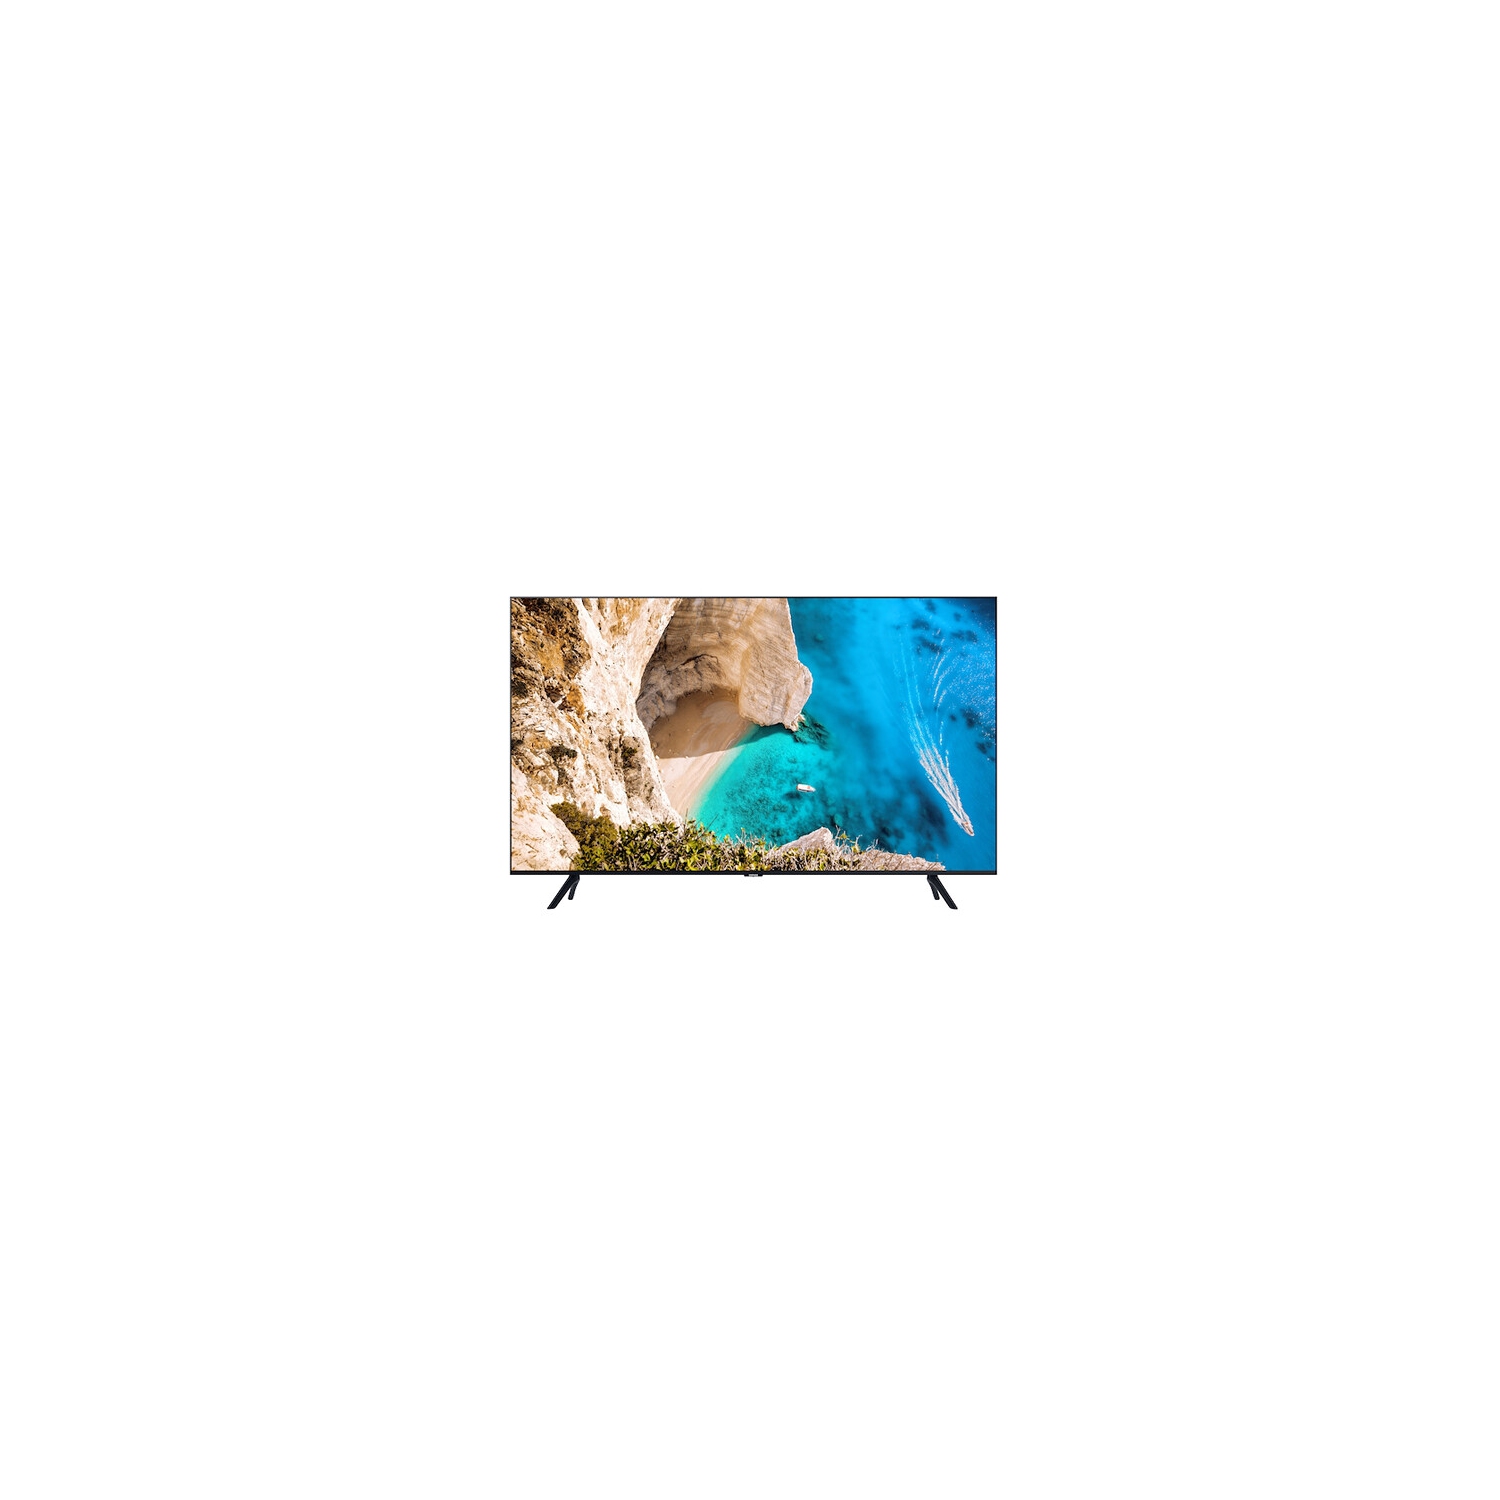 Samsung NT670U Series 65" 4K UHD LED TV - (HG65NT670UFXZA)